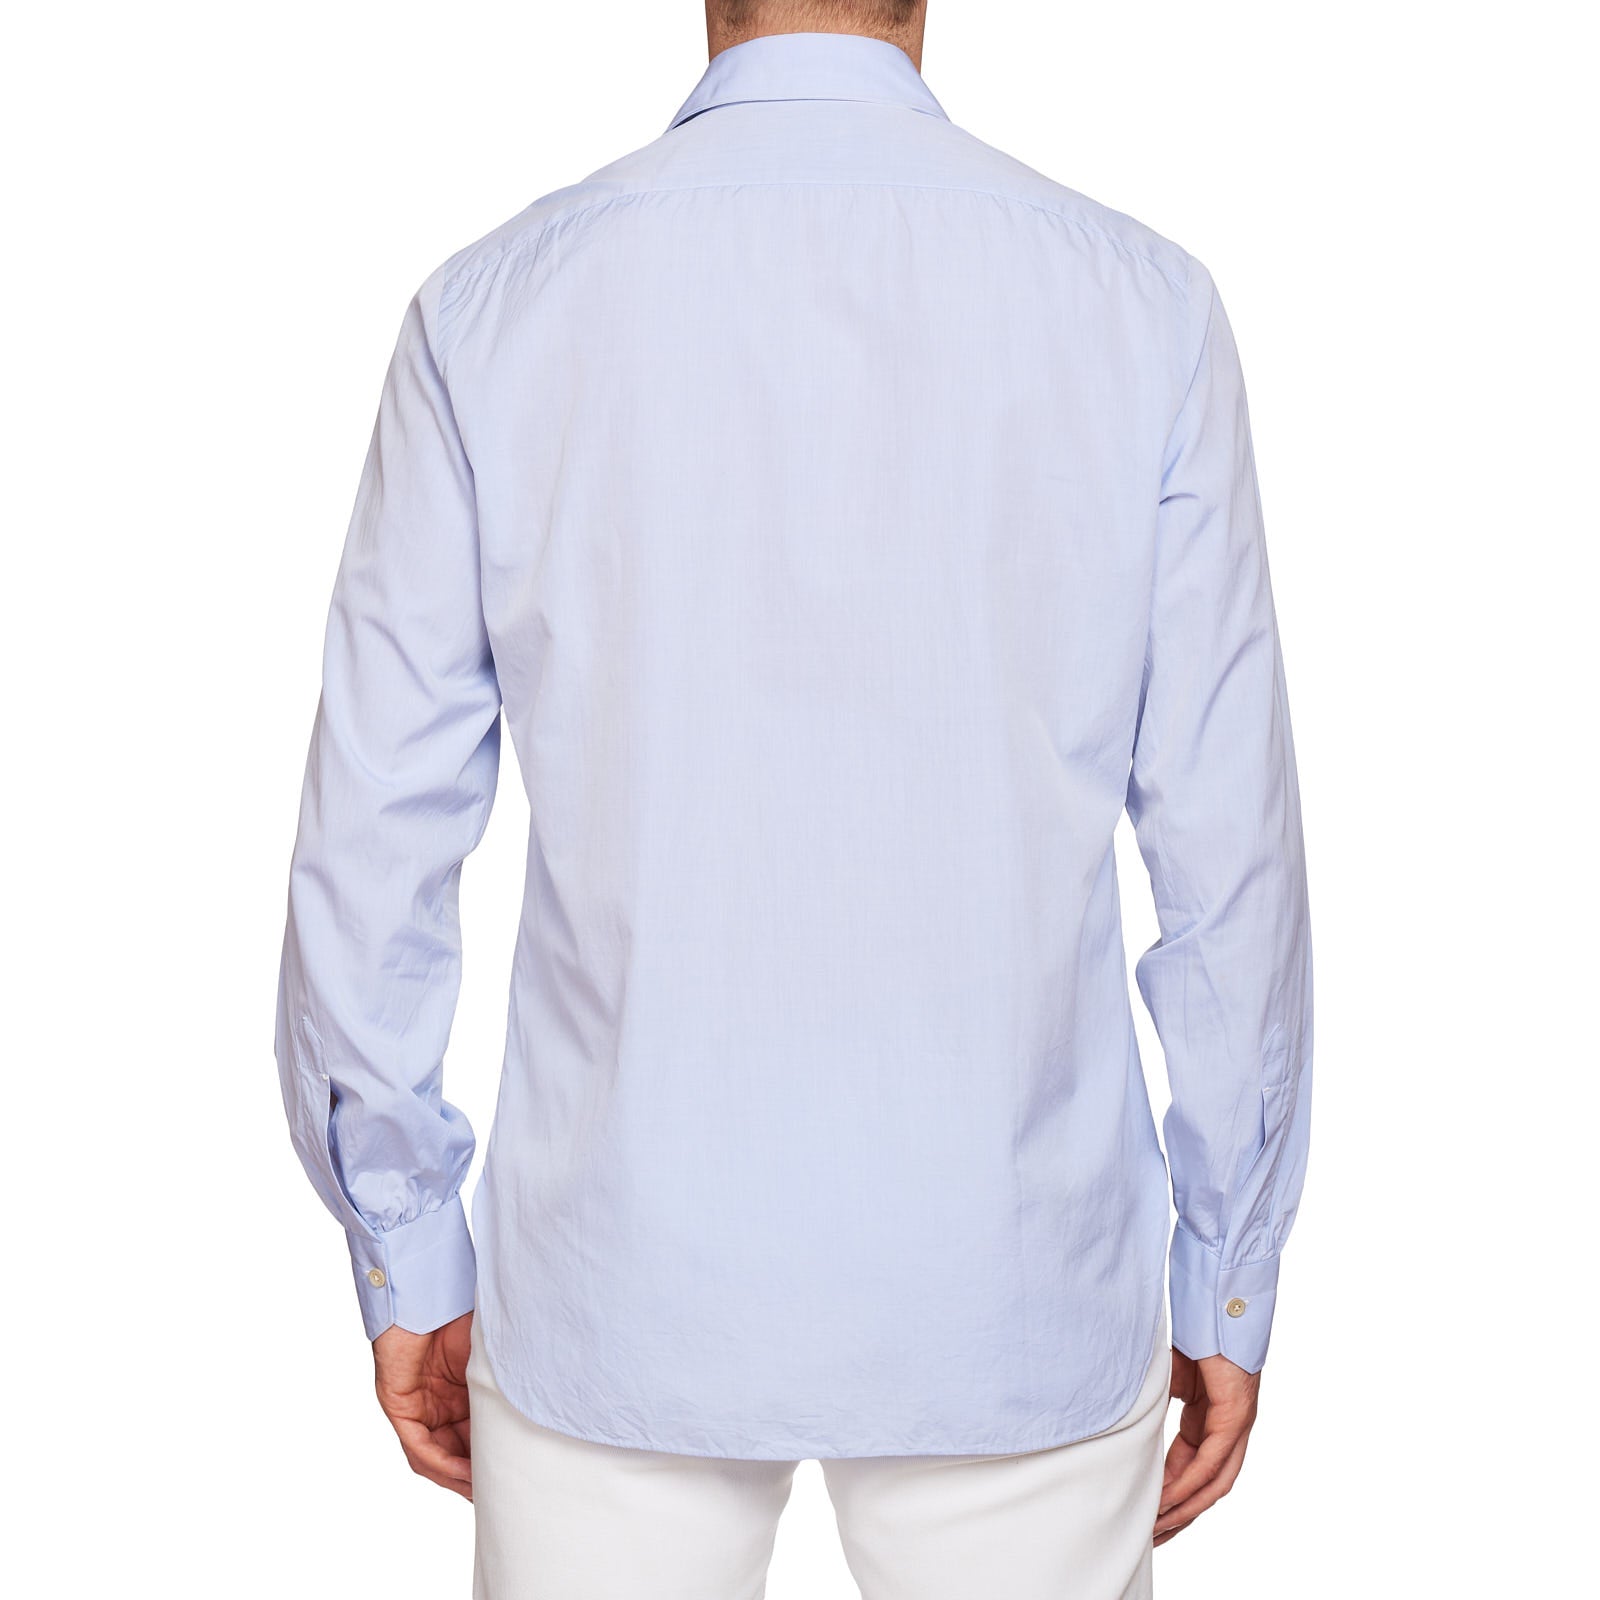 KITON Napoli Handmade Bespoke Light Blue Poplin Cotton Dress Shirt EU 39 NEW US 15.5 KITON